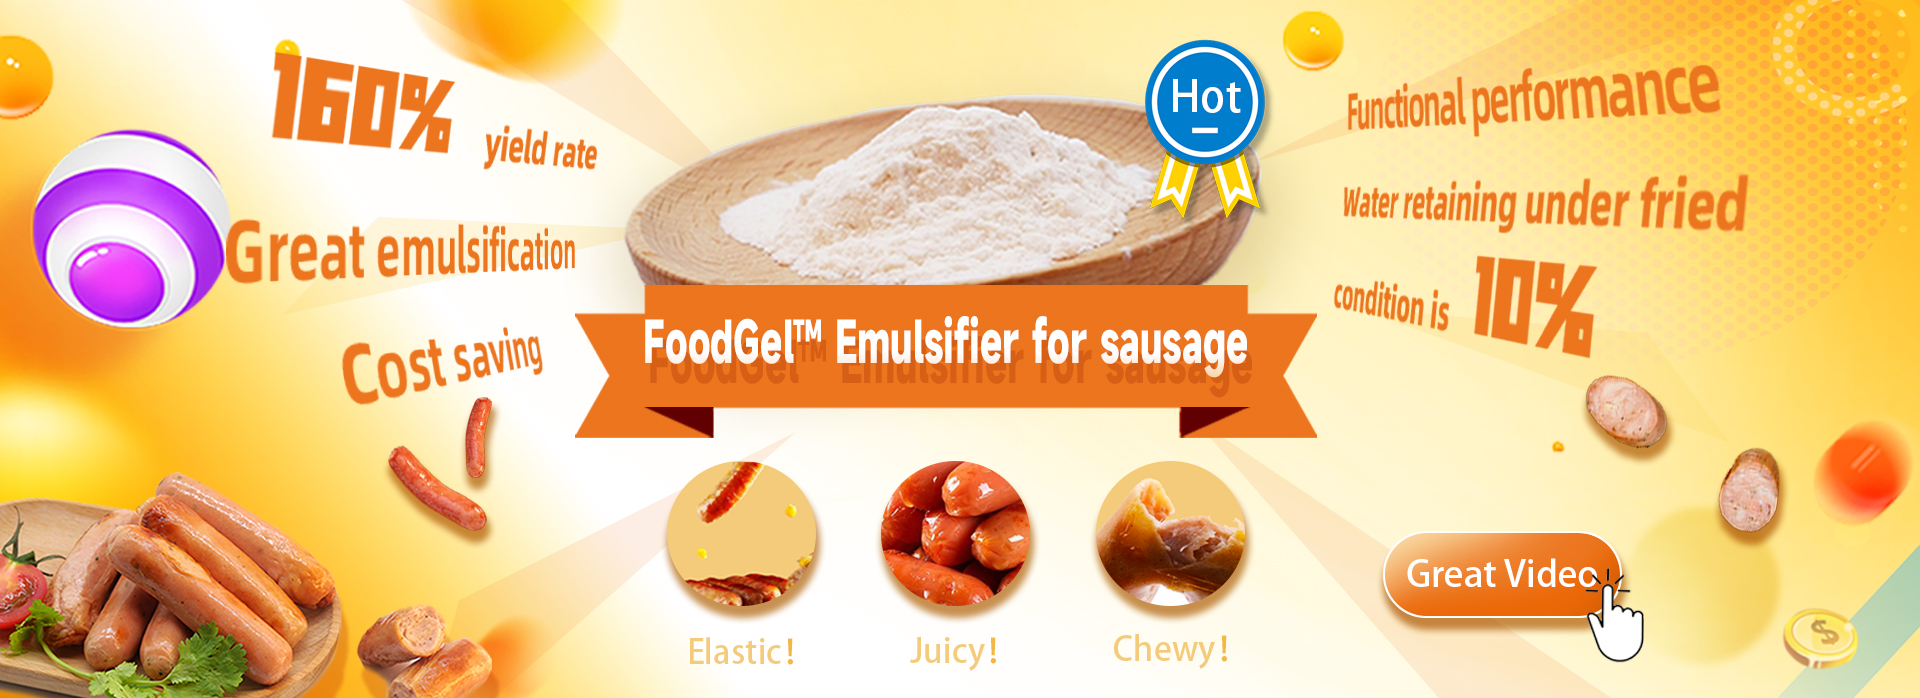 Foodmate Carrageenan Emulsifier for Sausage